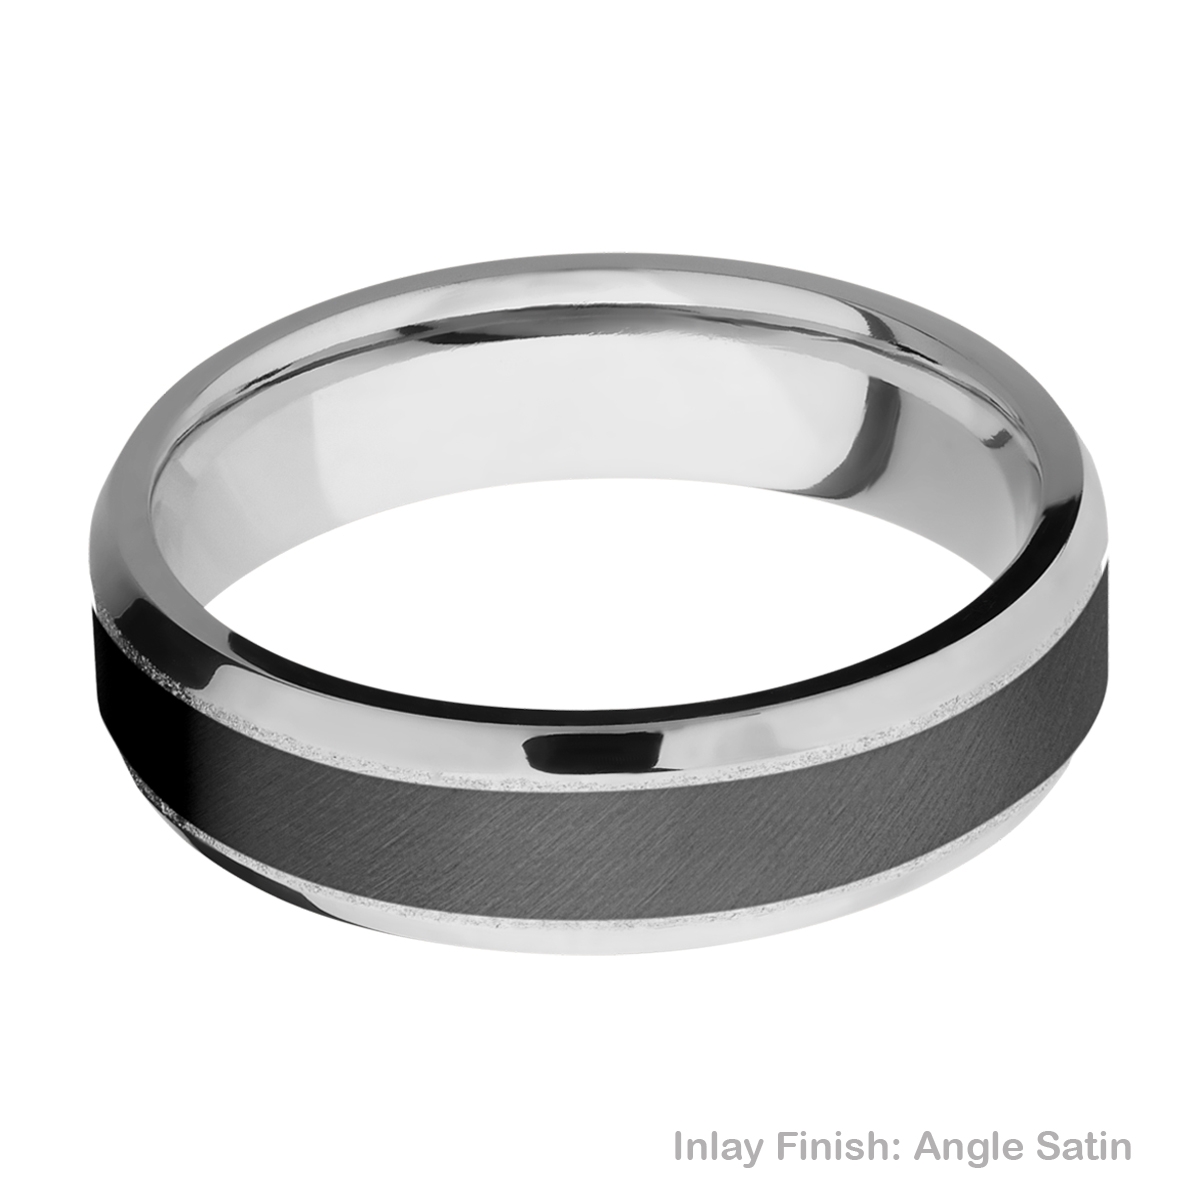 Lashbrook CCPF6B14(NS)/ZIRCONIUM Cobalt Chrome Wedding Ring or Band